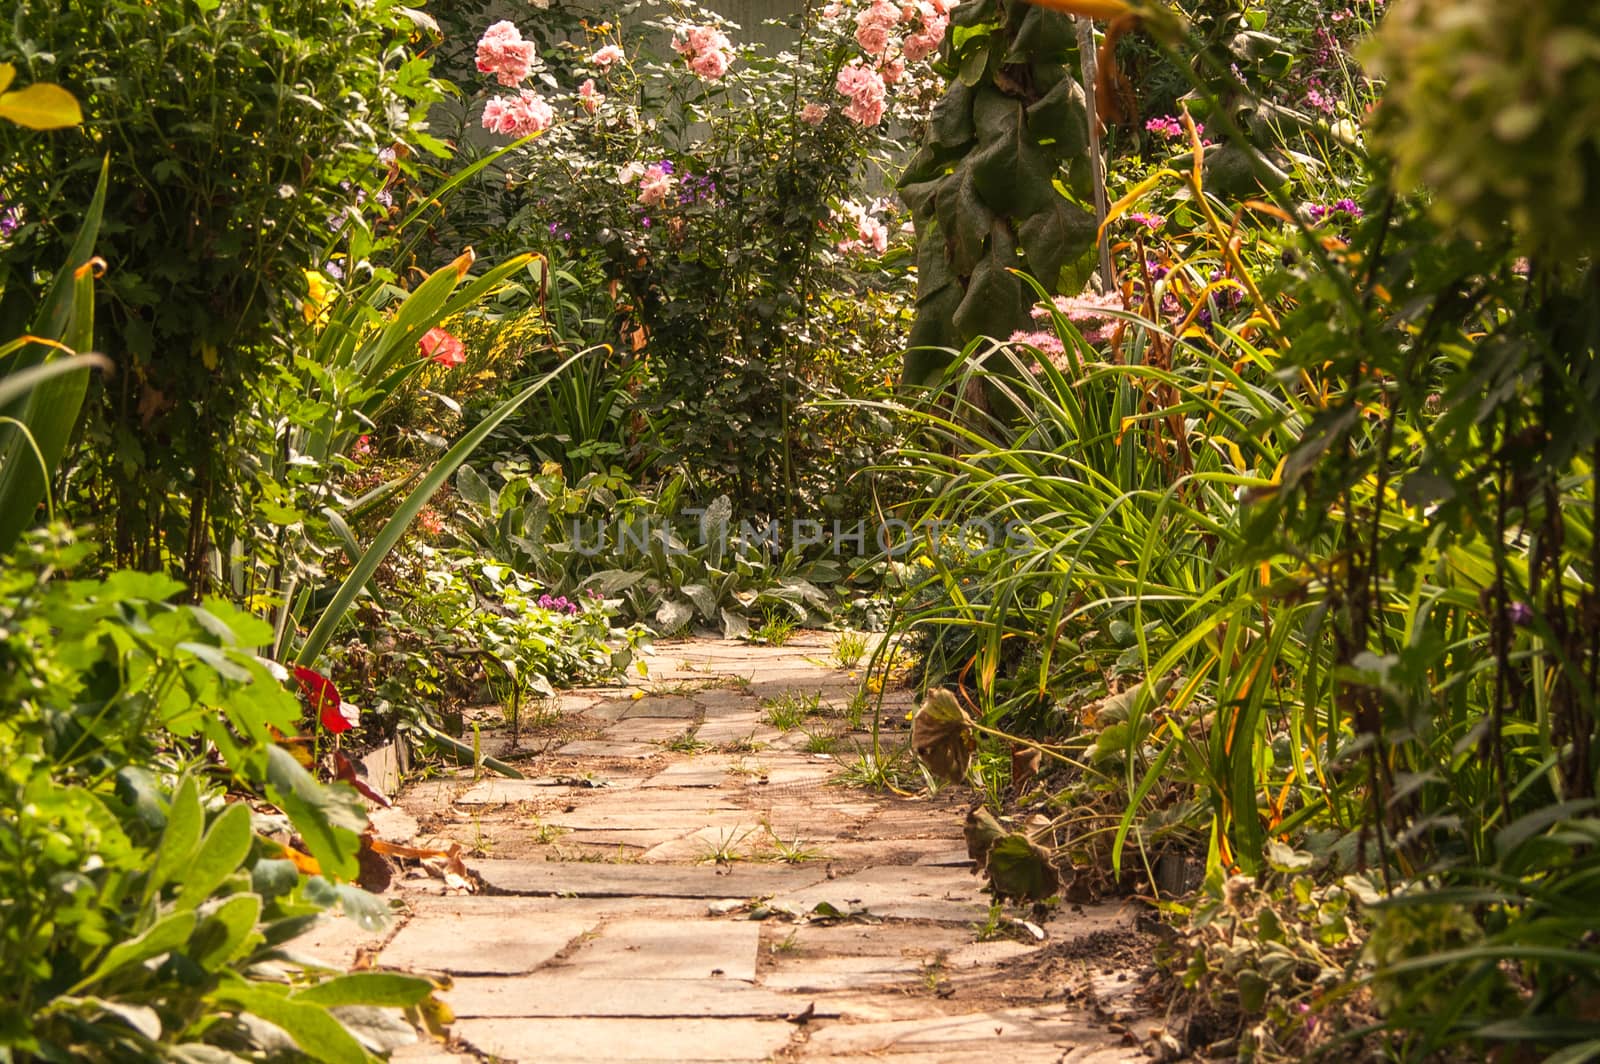 stone path in a garden  by antonius_